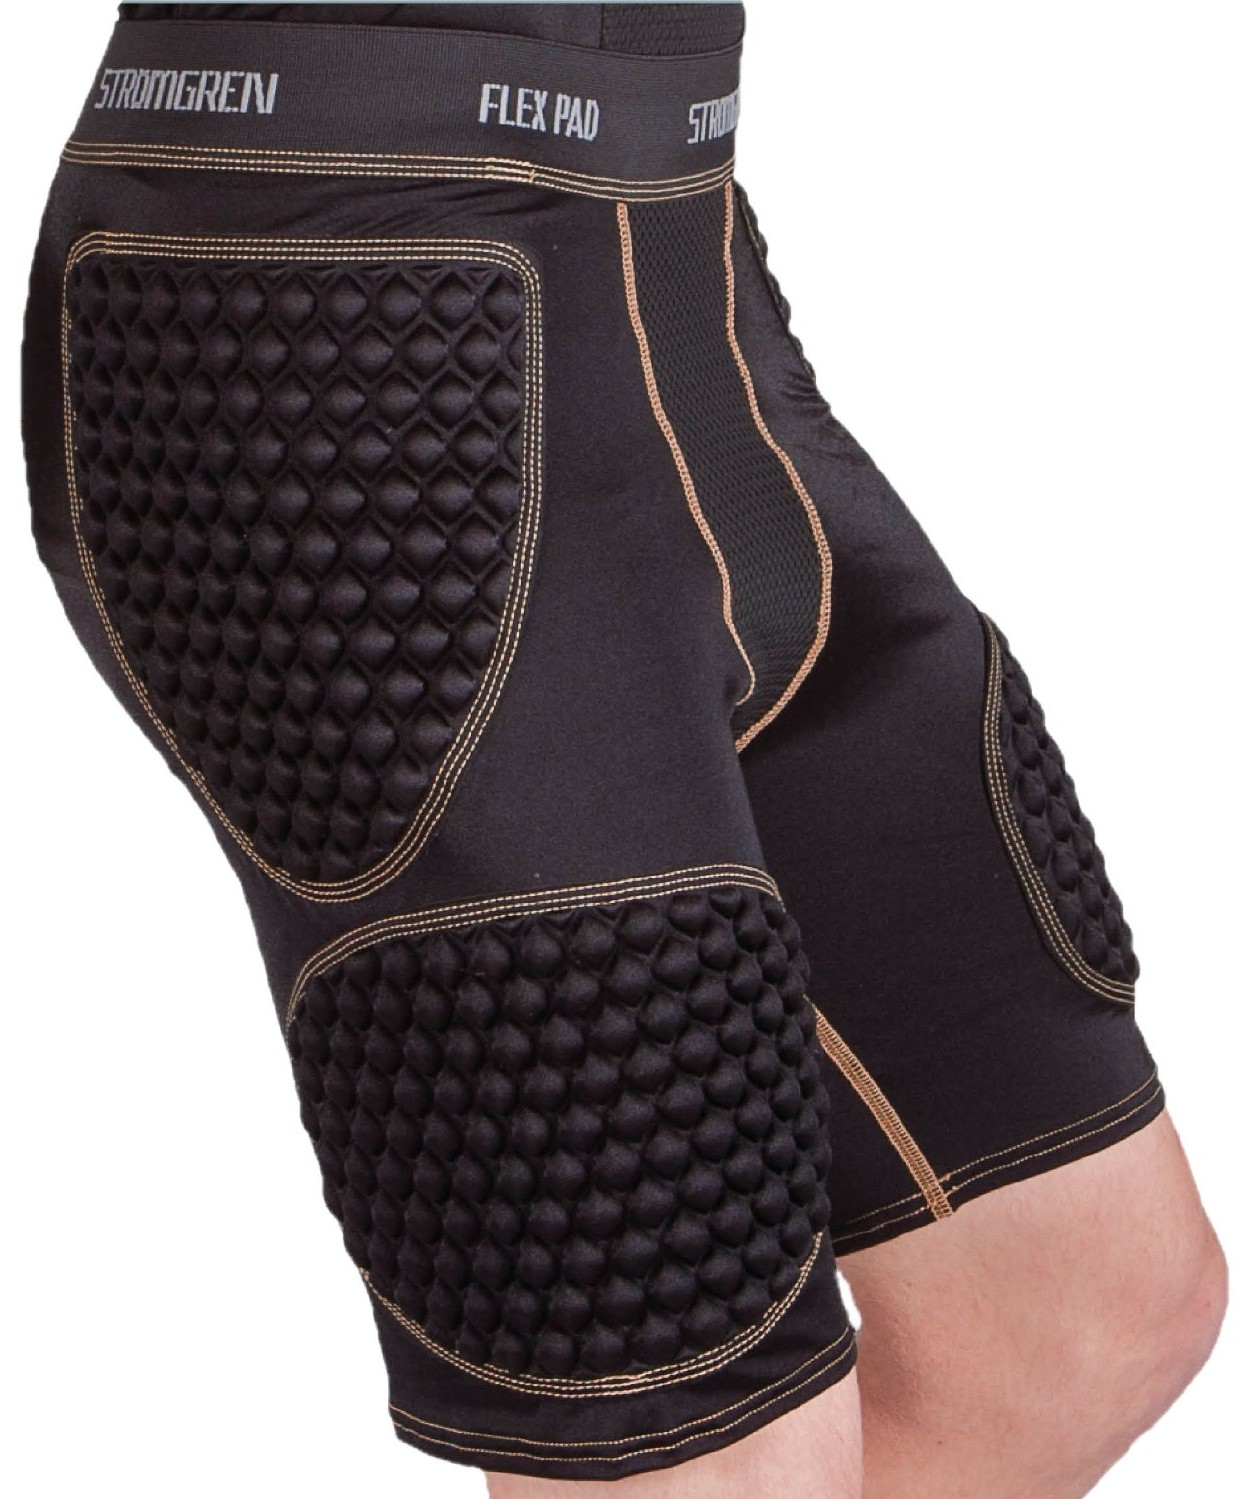 Nike pro combat padded compression short size 